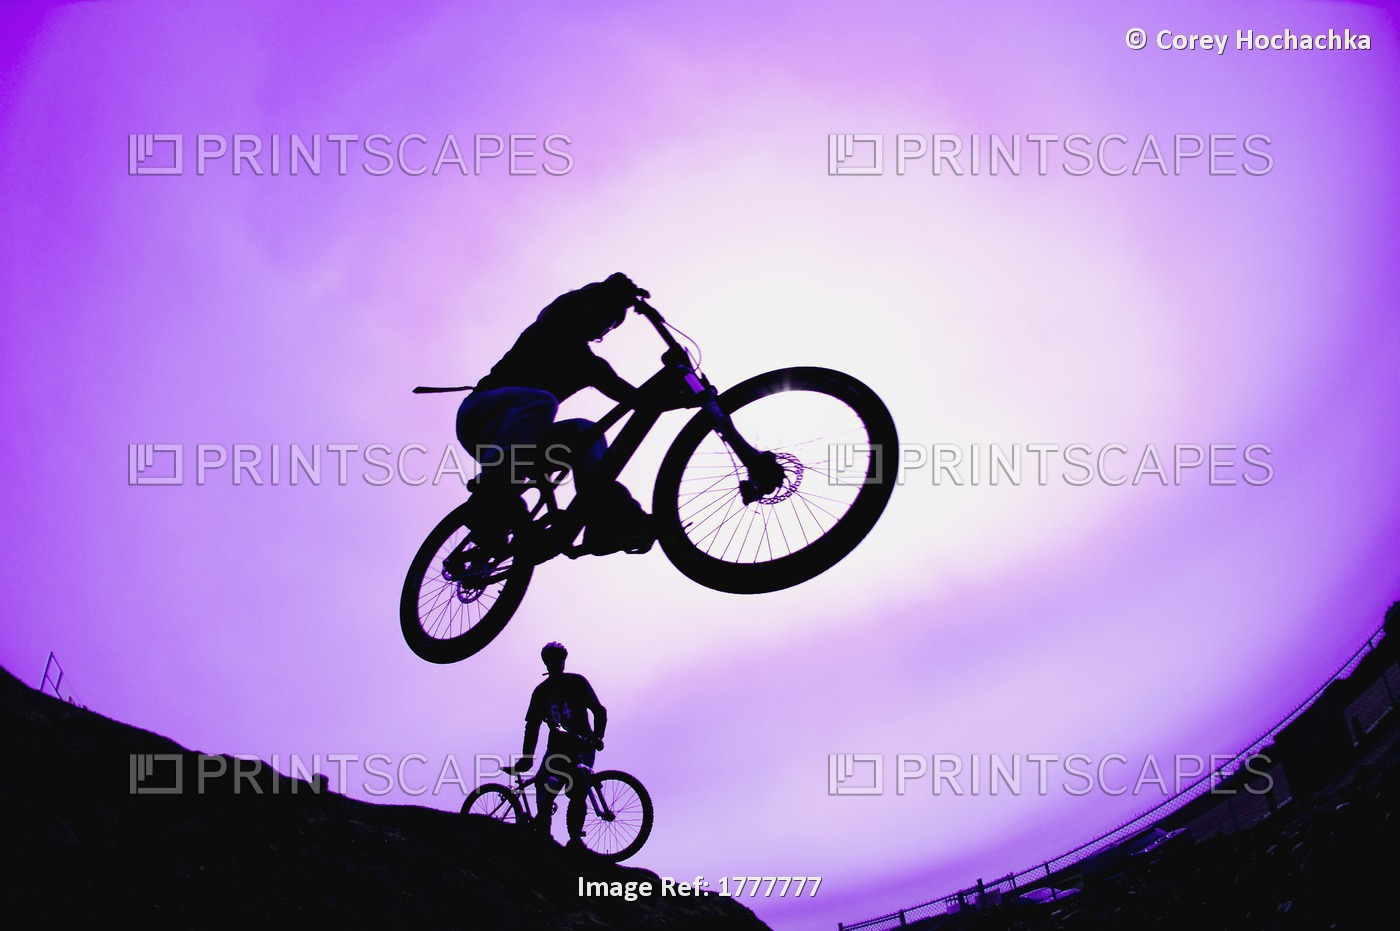 A Stunt Cyclist Silhouette